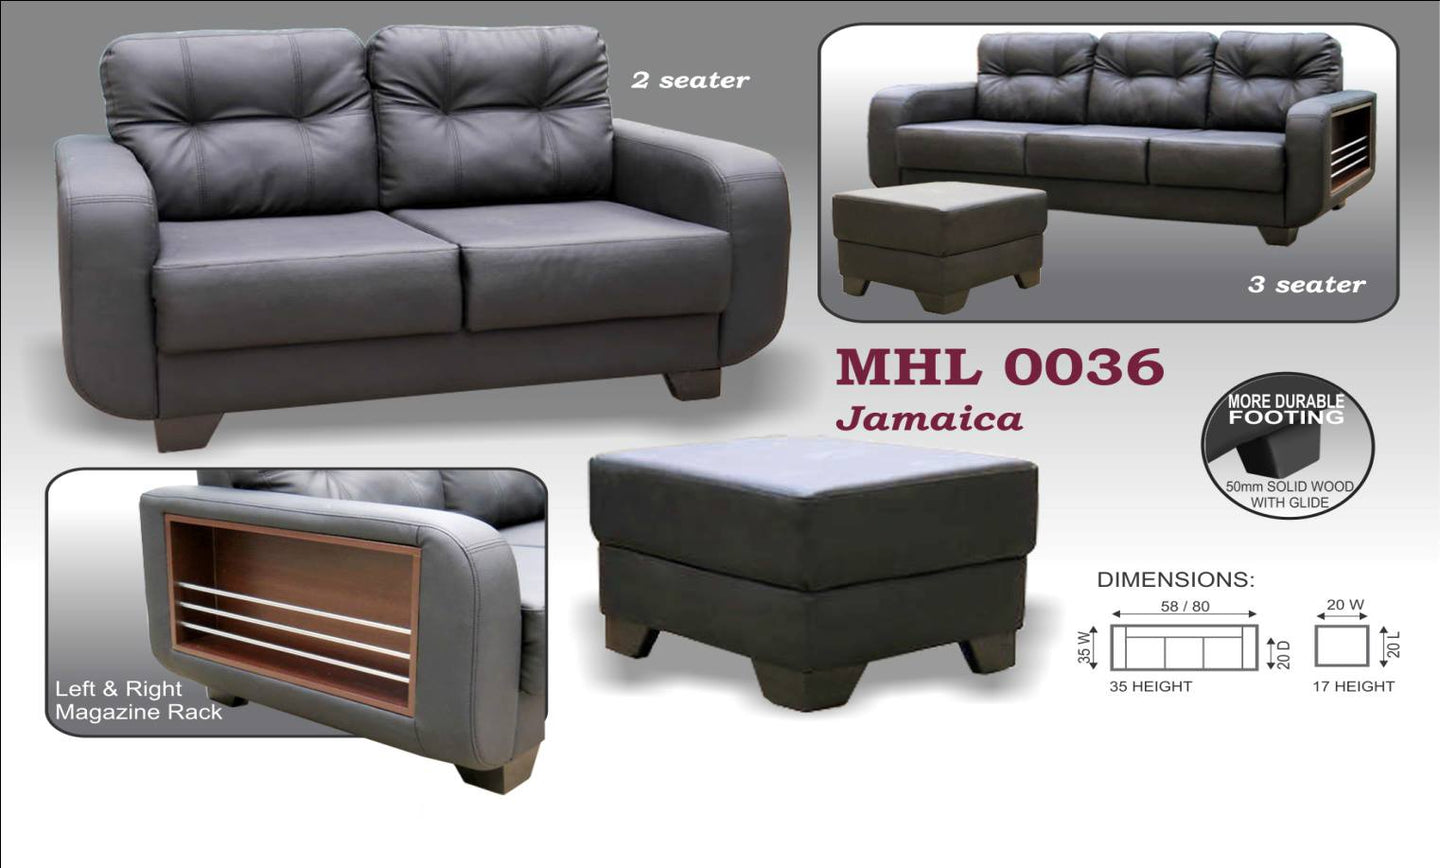 MHL 0036 Jamaica